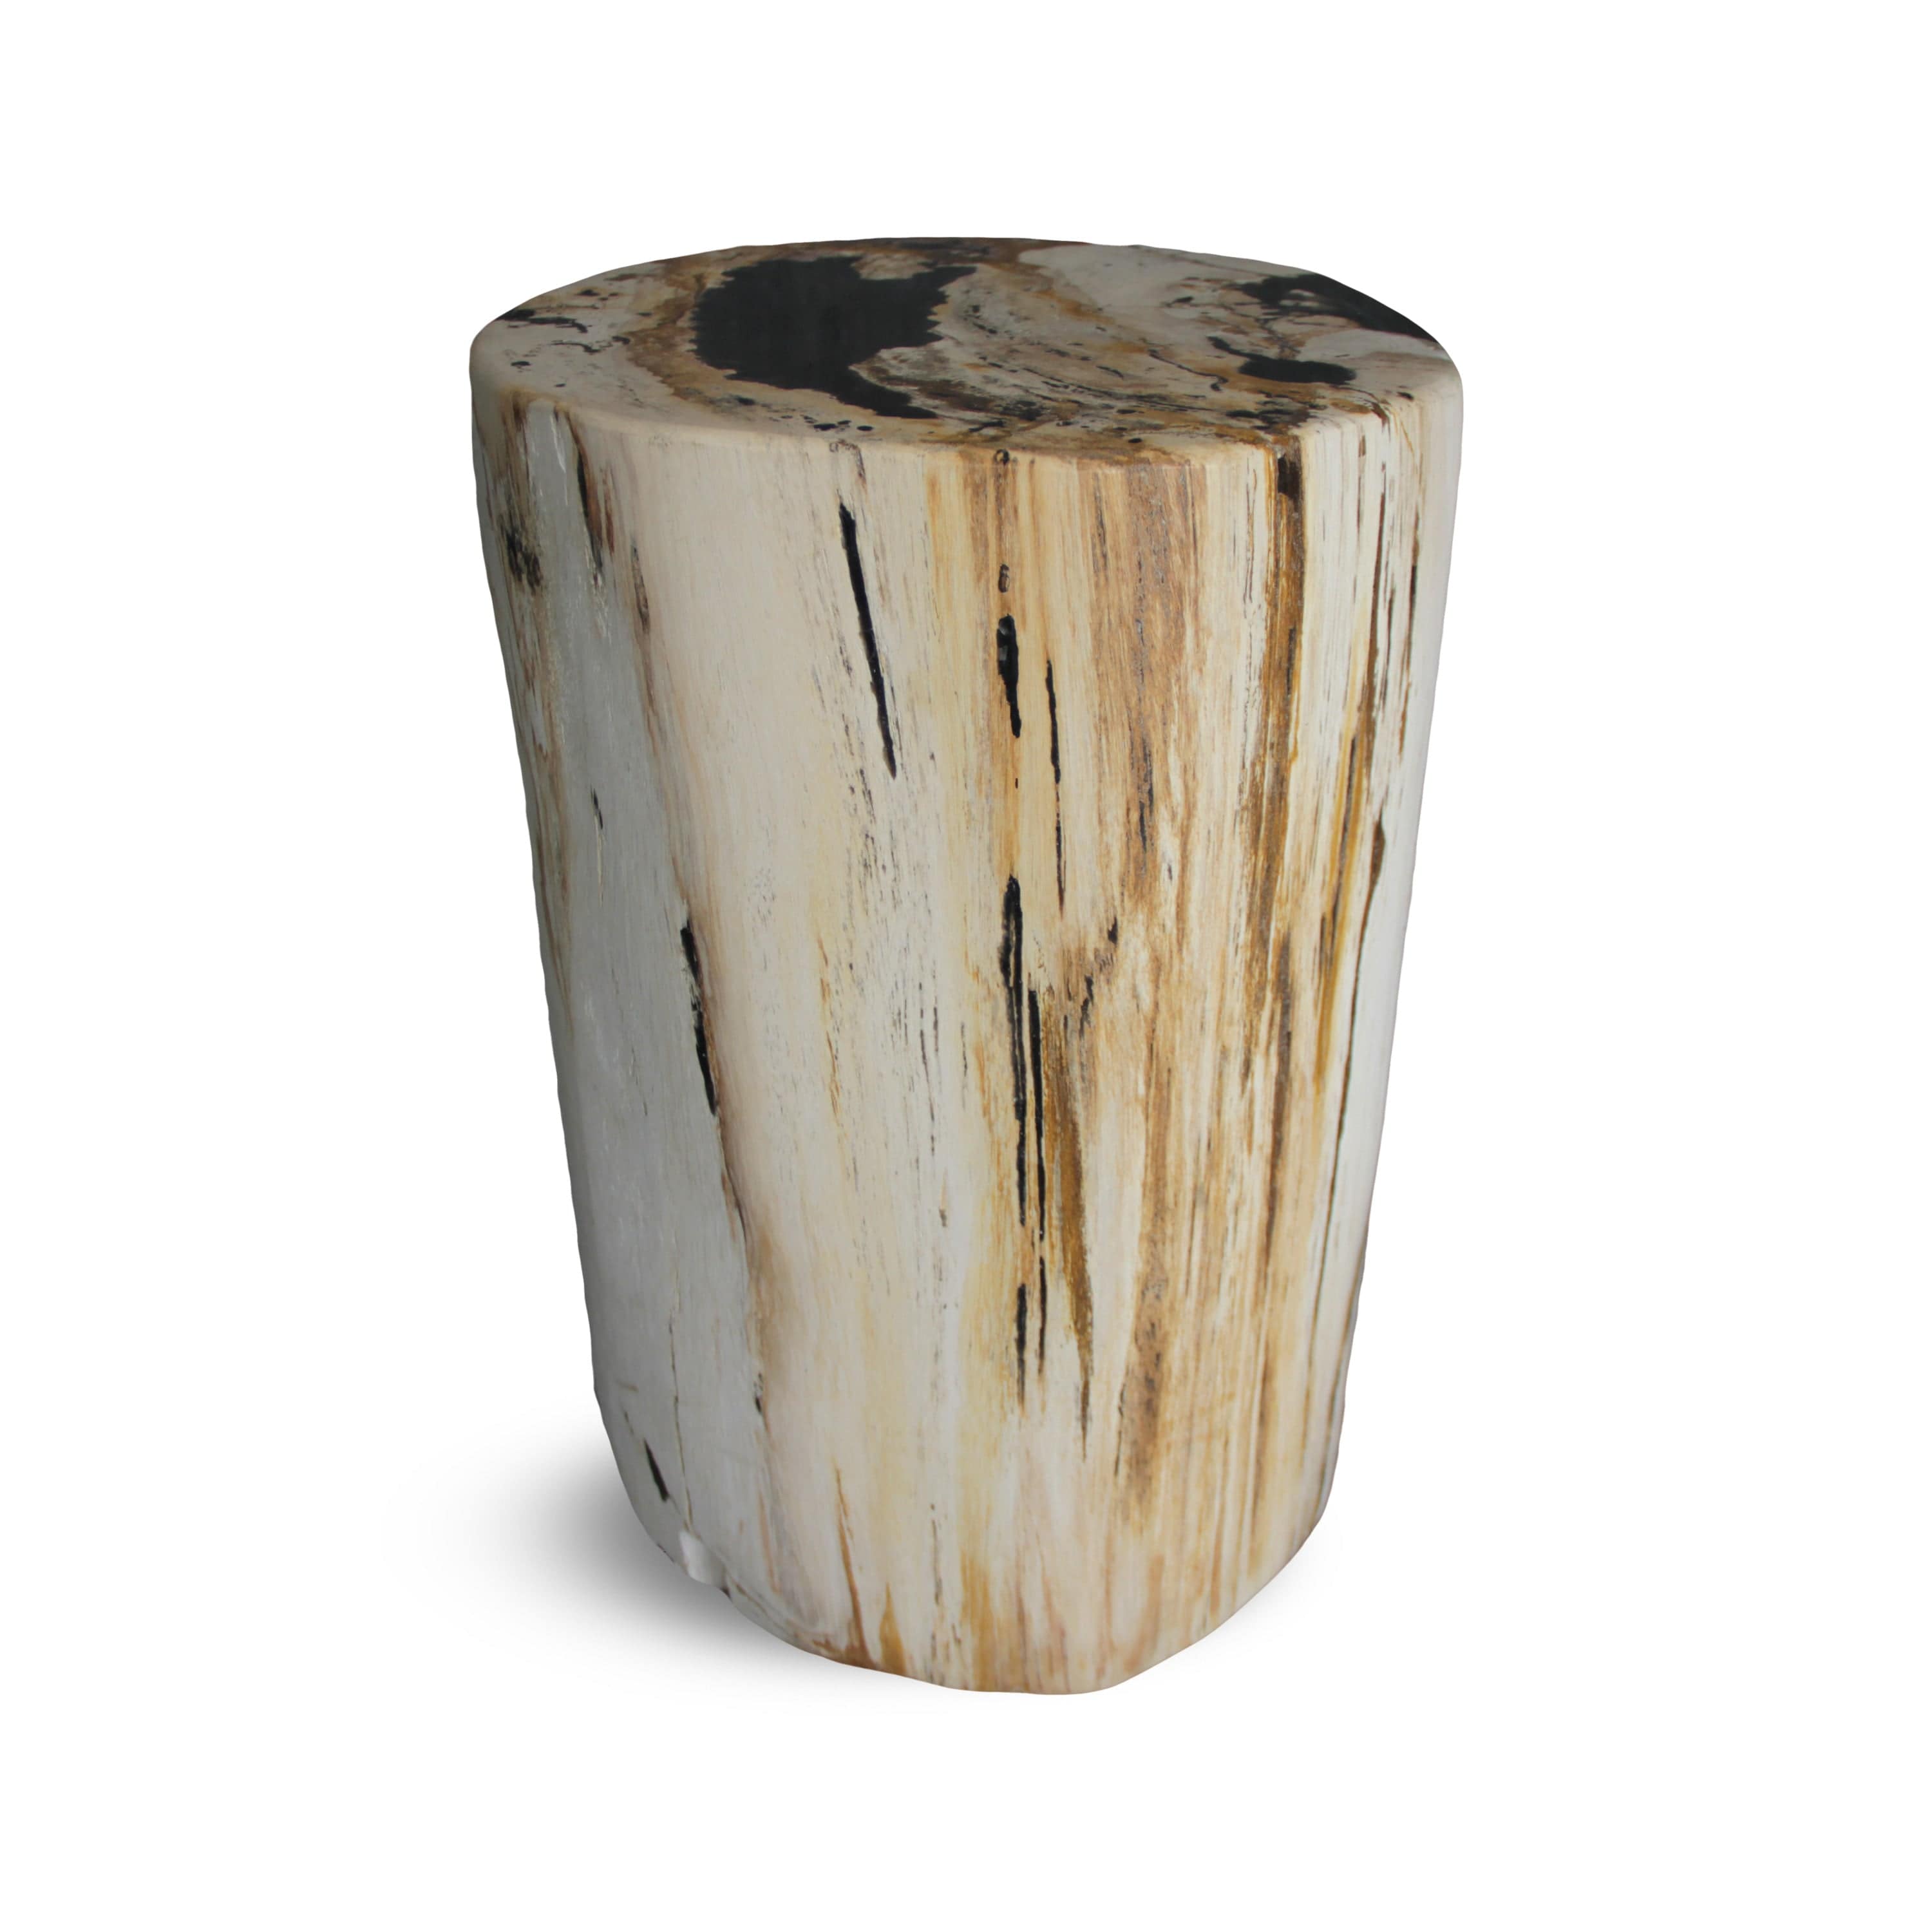 Kalifano Petrified Wood Petrified Wood Round Stump / Stool from Indonesia - 18" / 154 lbs PWS2800.010